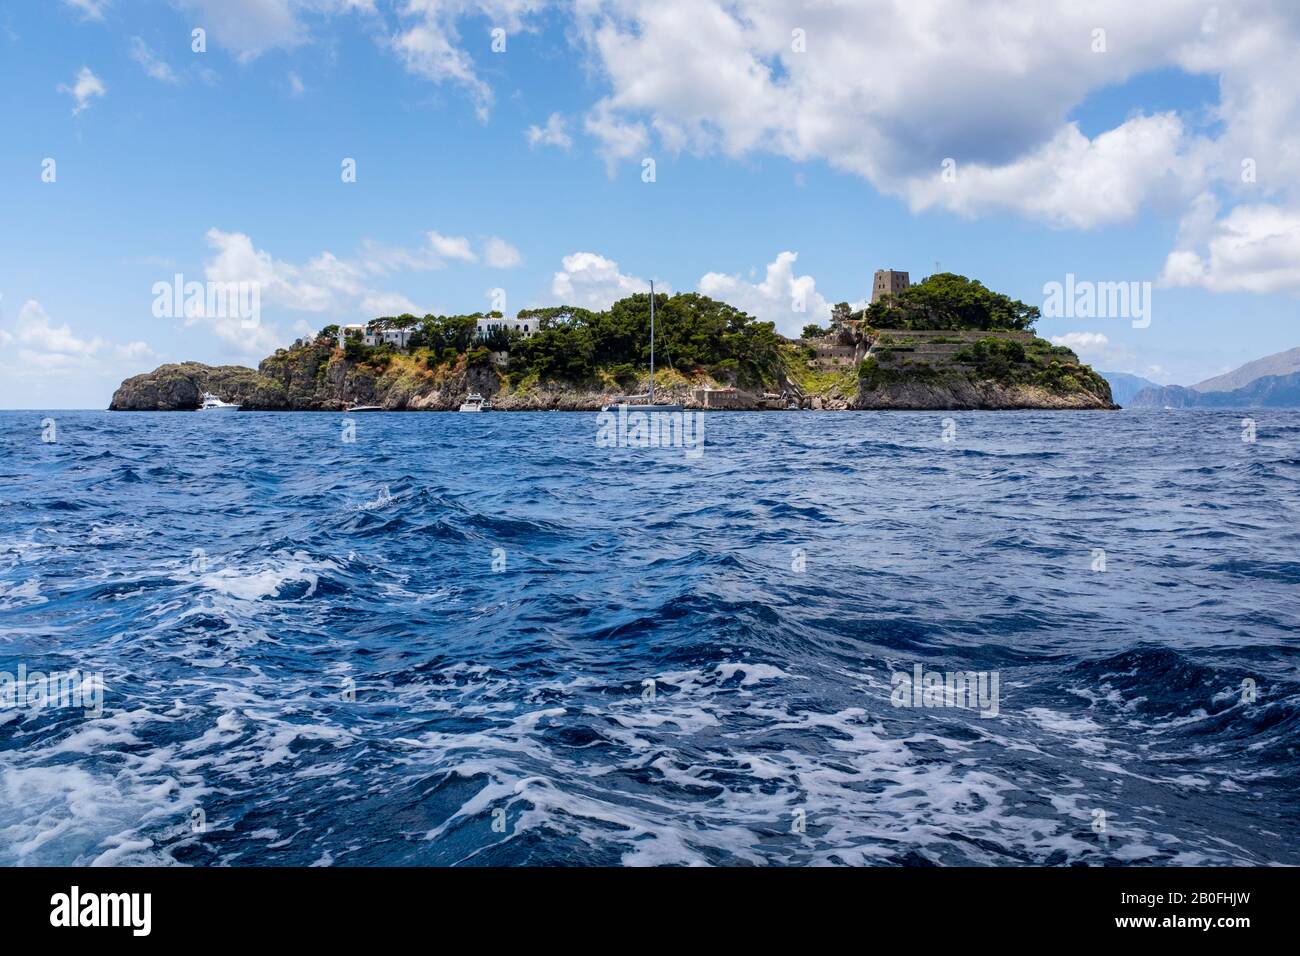 The idyllic island of Il Gallo Lungo near Positano, on the Amalfi Coast, Italy Stock Photo